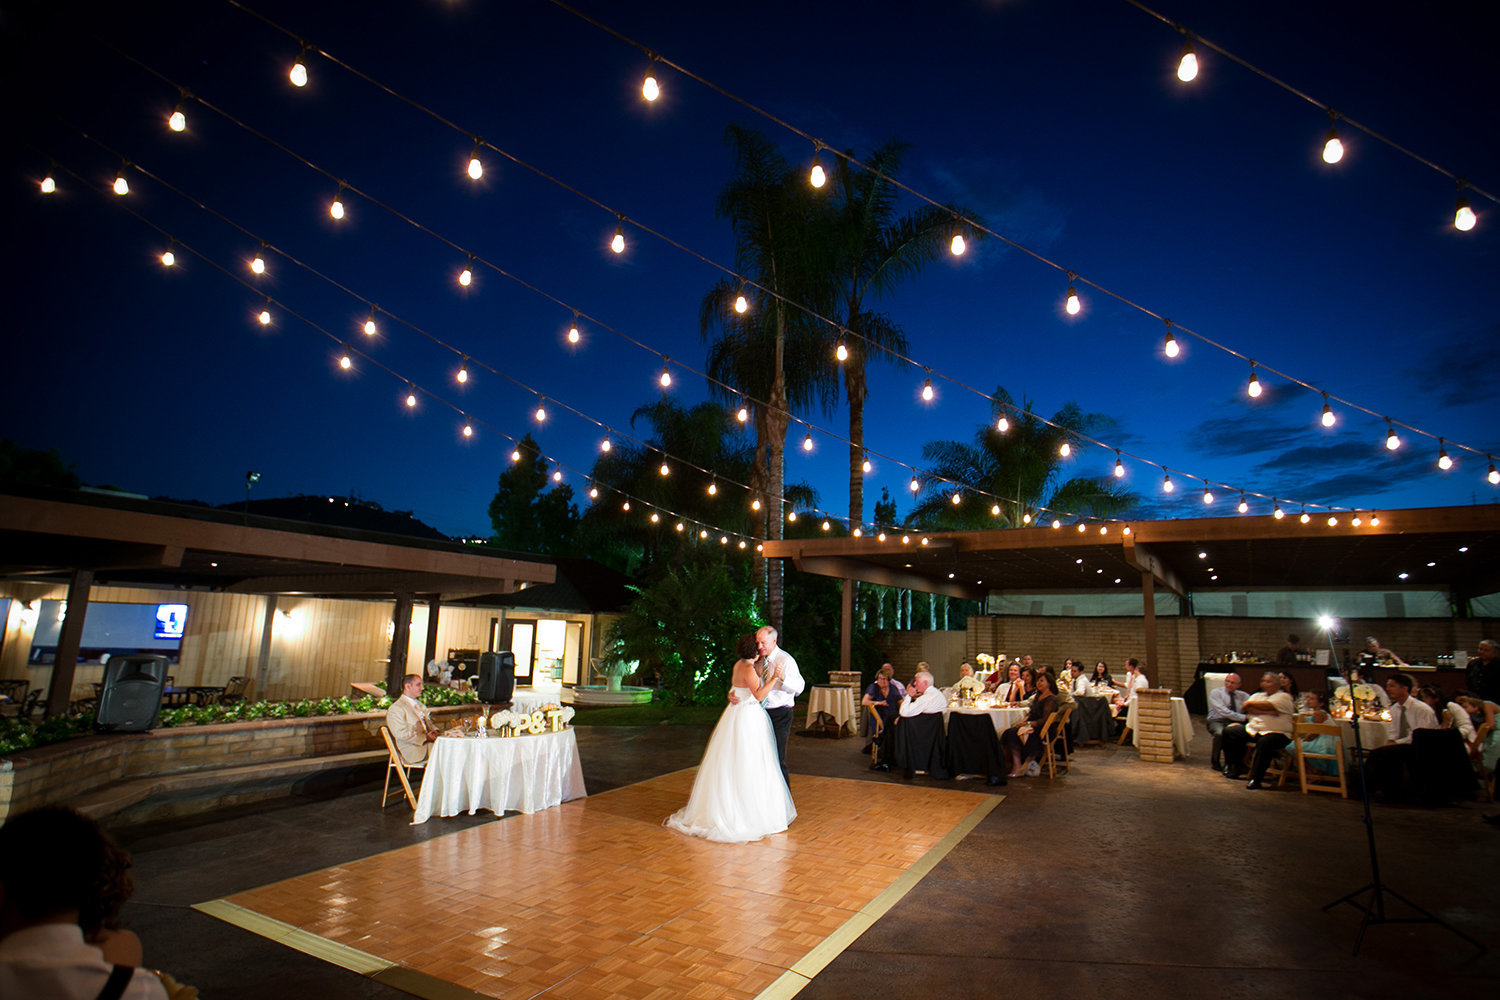 La Jolla Shores Tennis Club wedding photos nigh shot beautiful lights